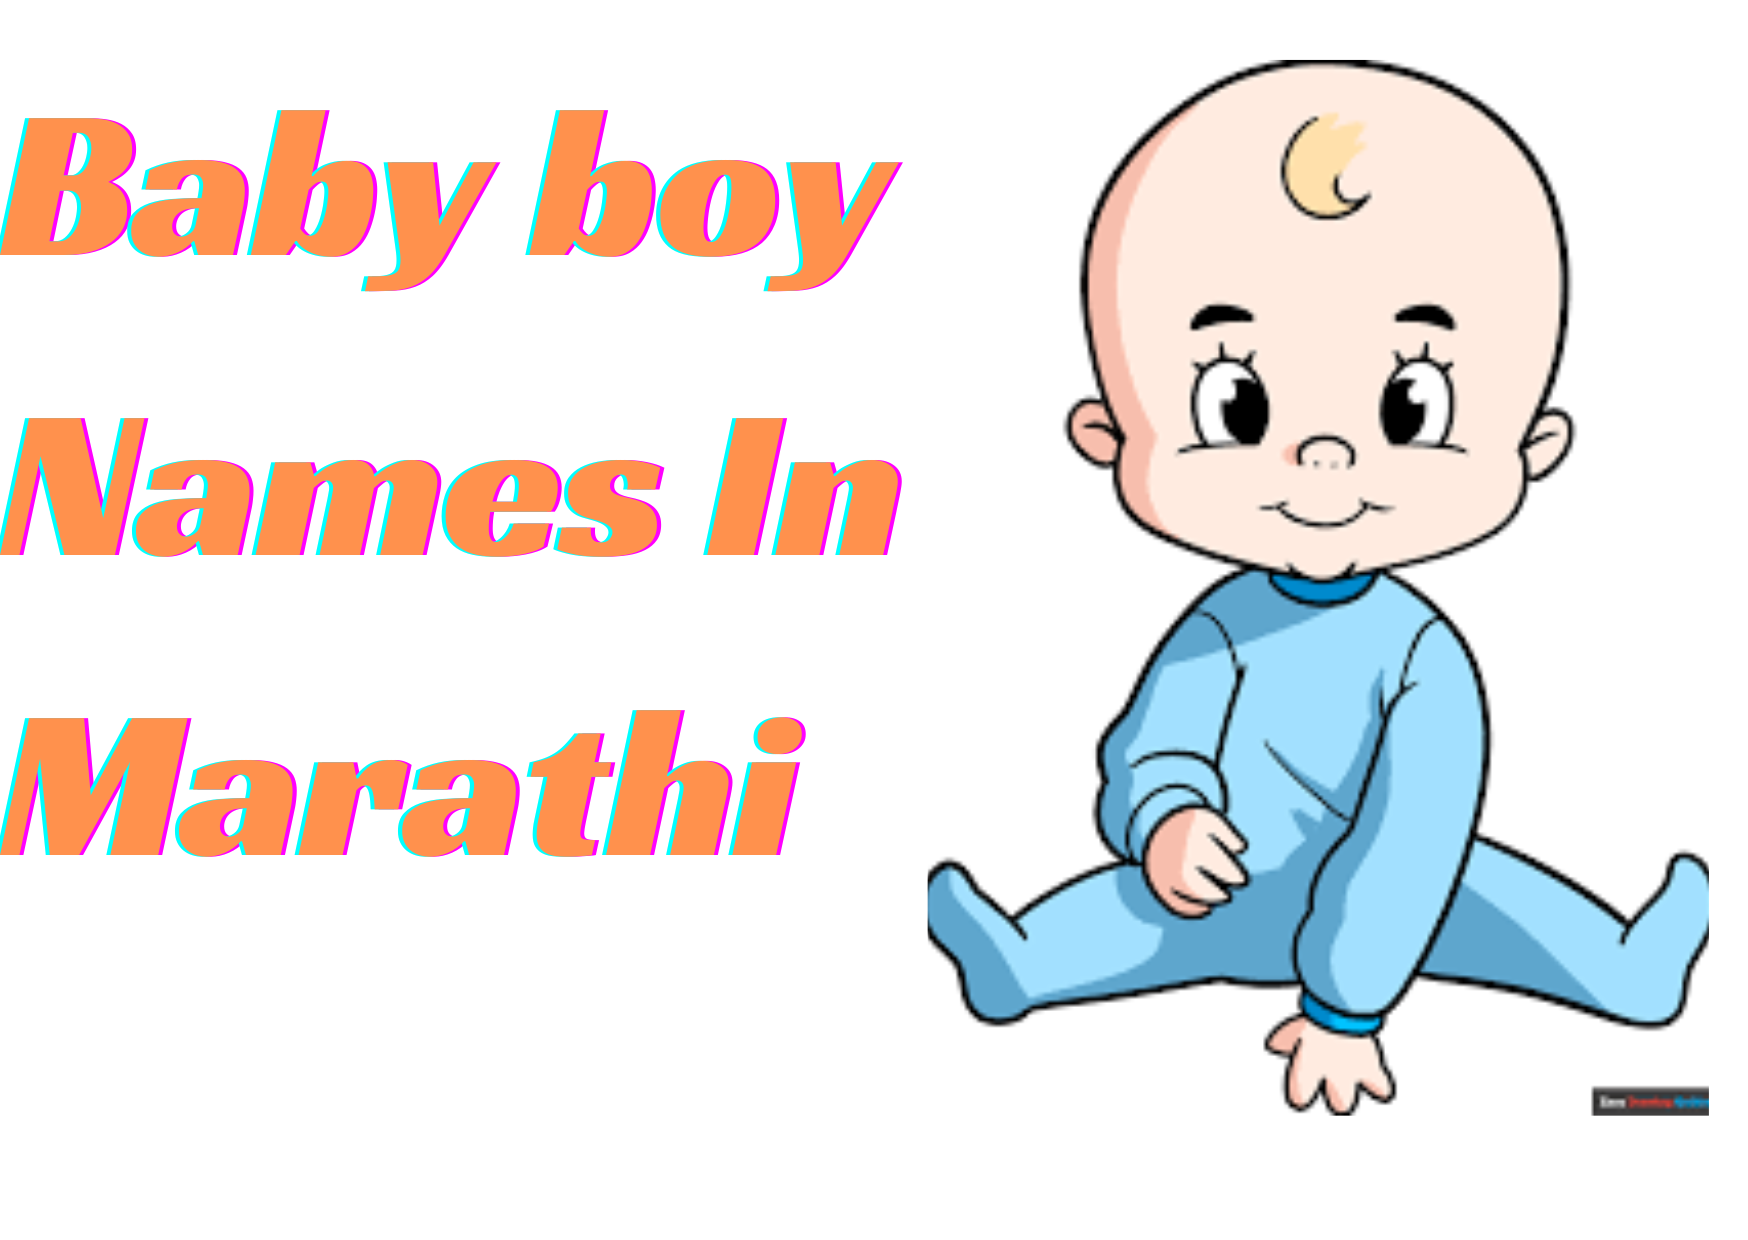 Baby boy Names In Marathi